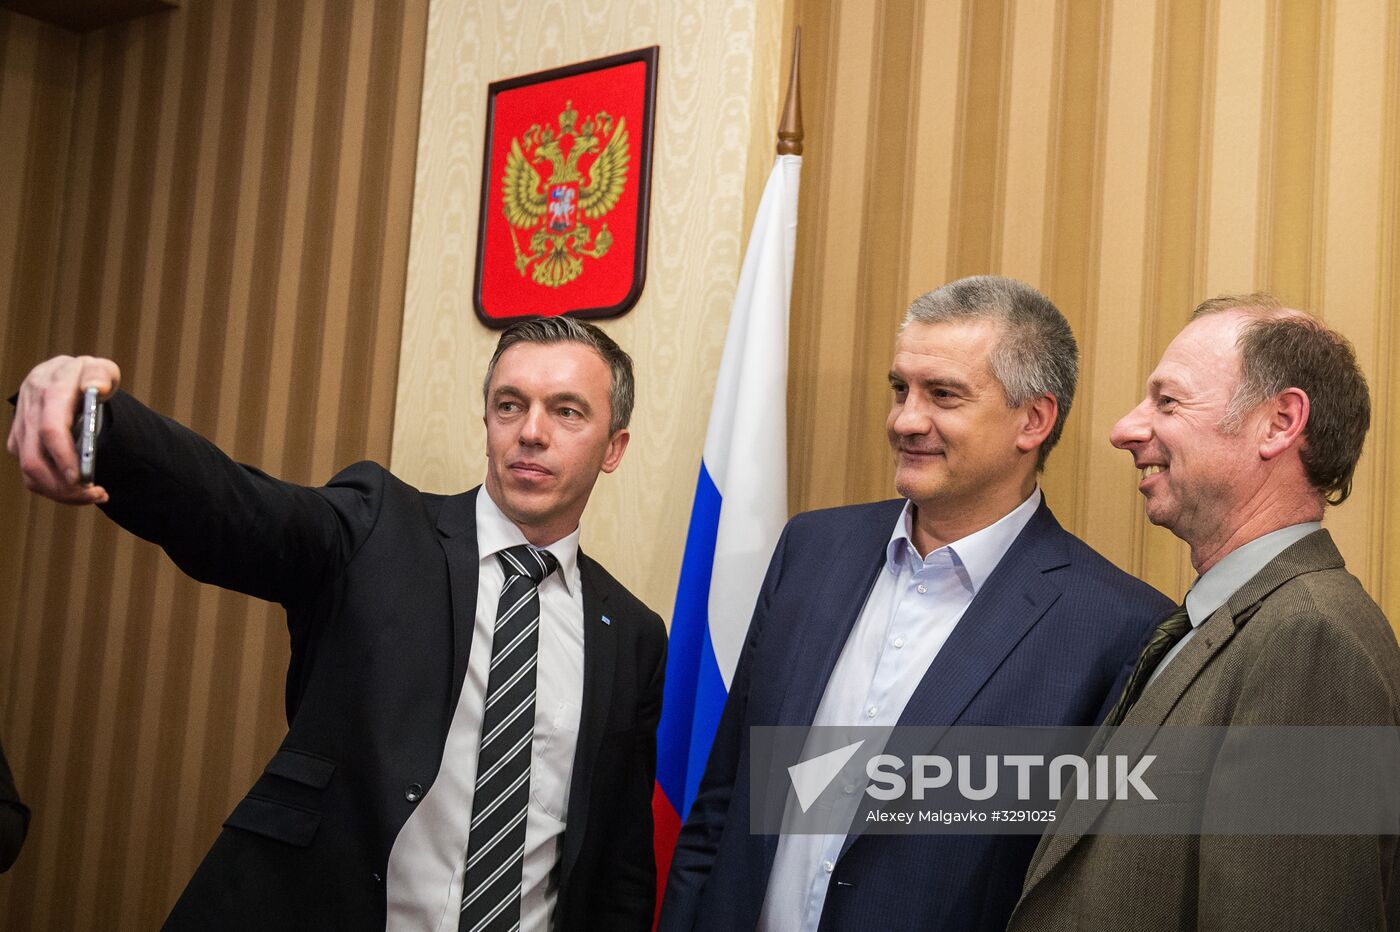 Head of Republic of Crimea Sergei Aksyonov meets with German delegation